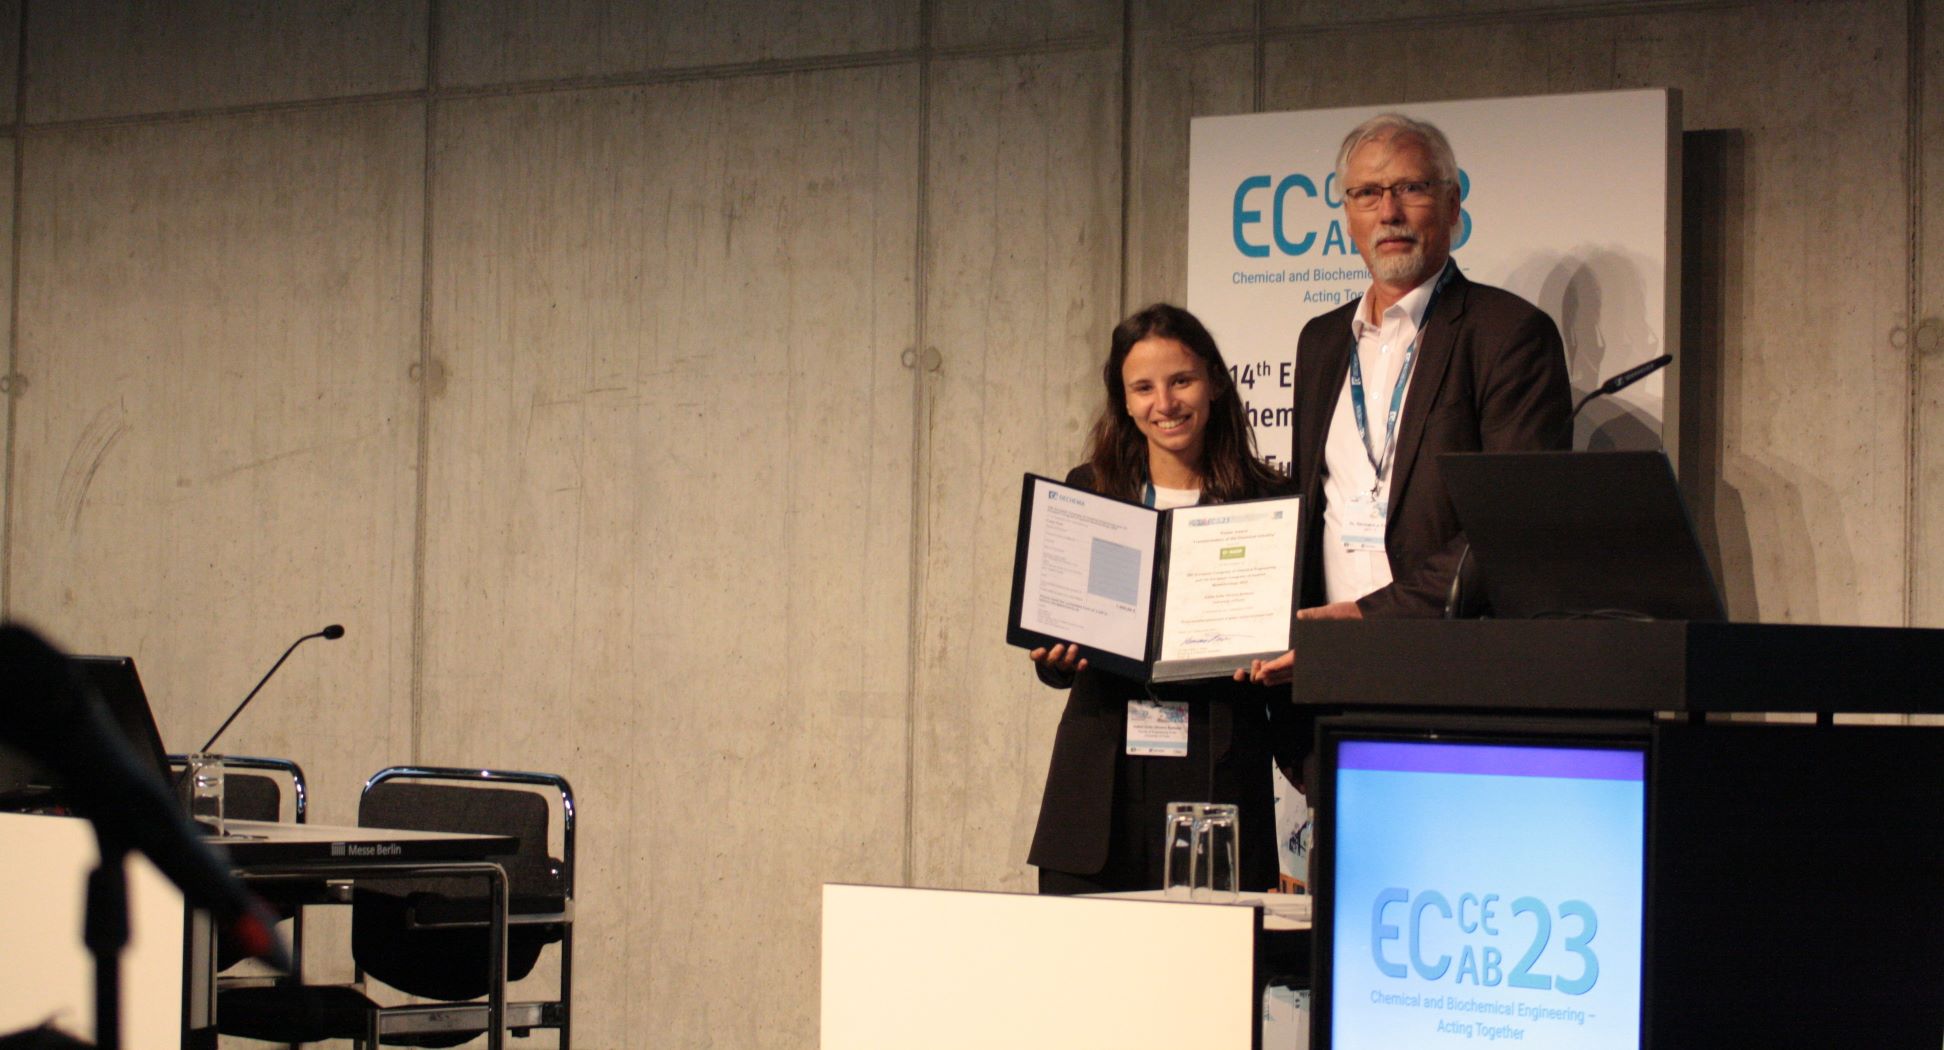 Isabel Barbosa awarded ECCE-ECAB 2023